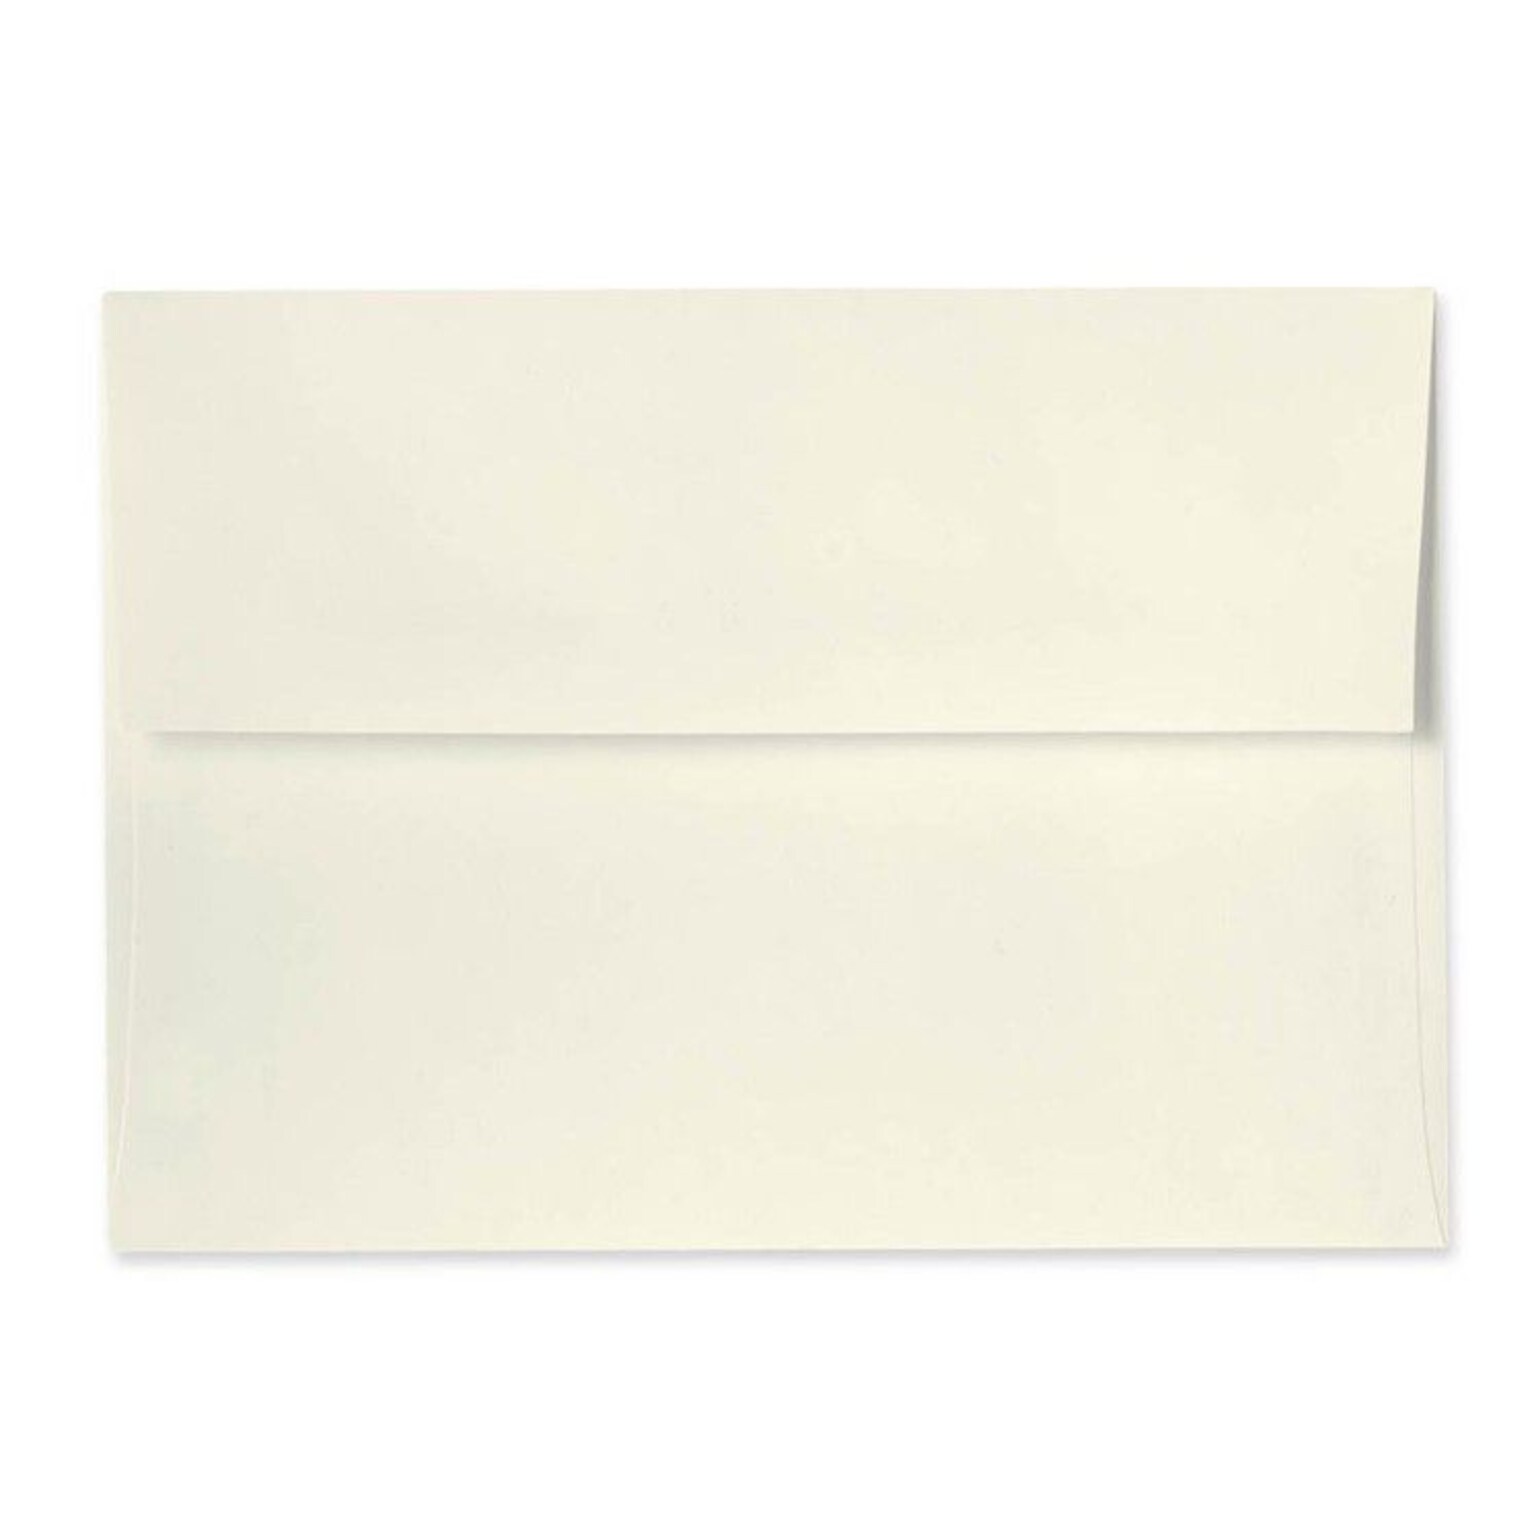 LUX A8 Invitation Envelopes (5 1/2 x 8 1/8) 250/Box, Natural (5885-01-250)